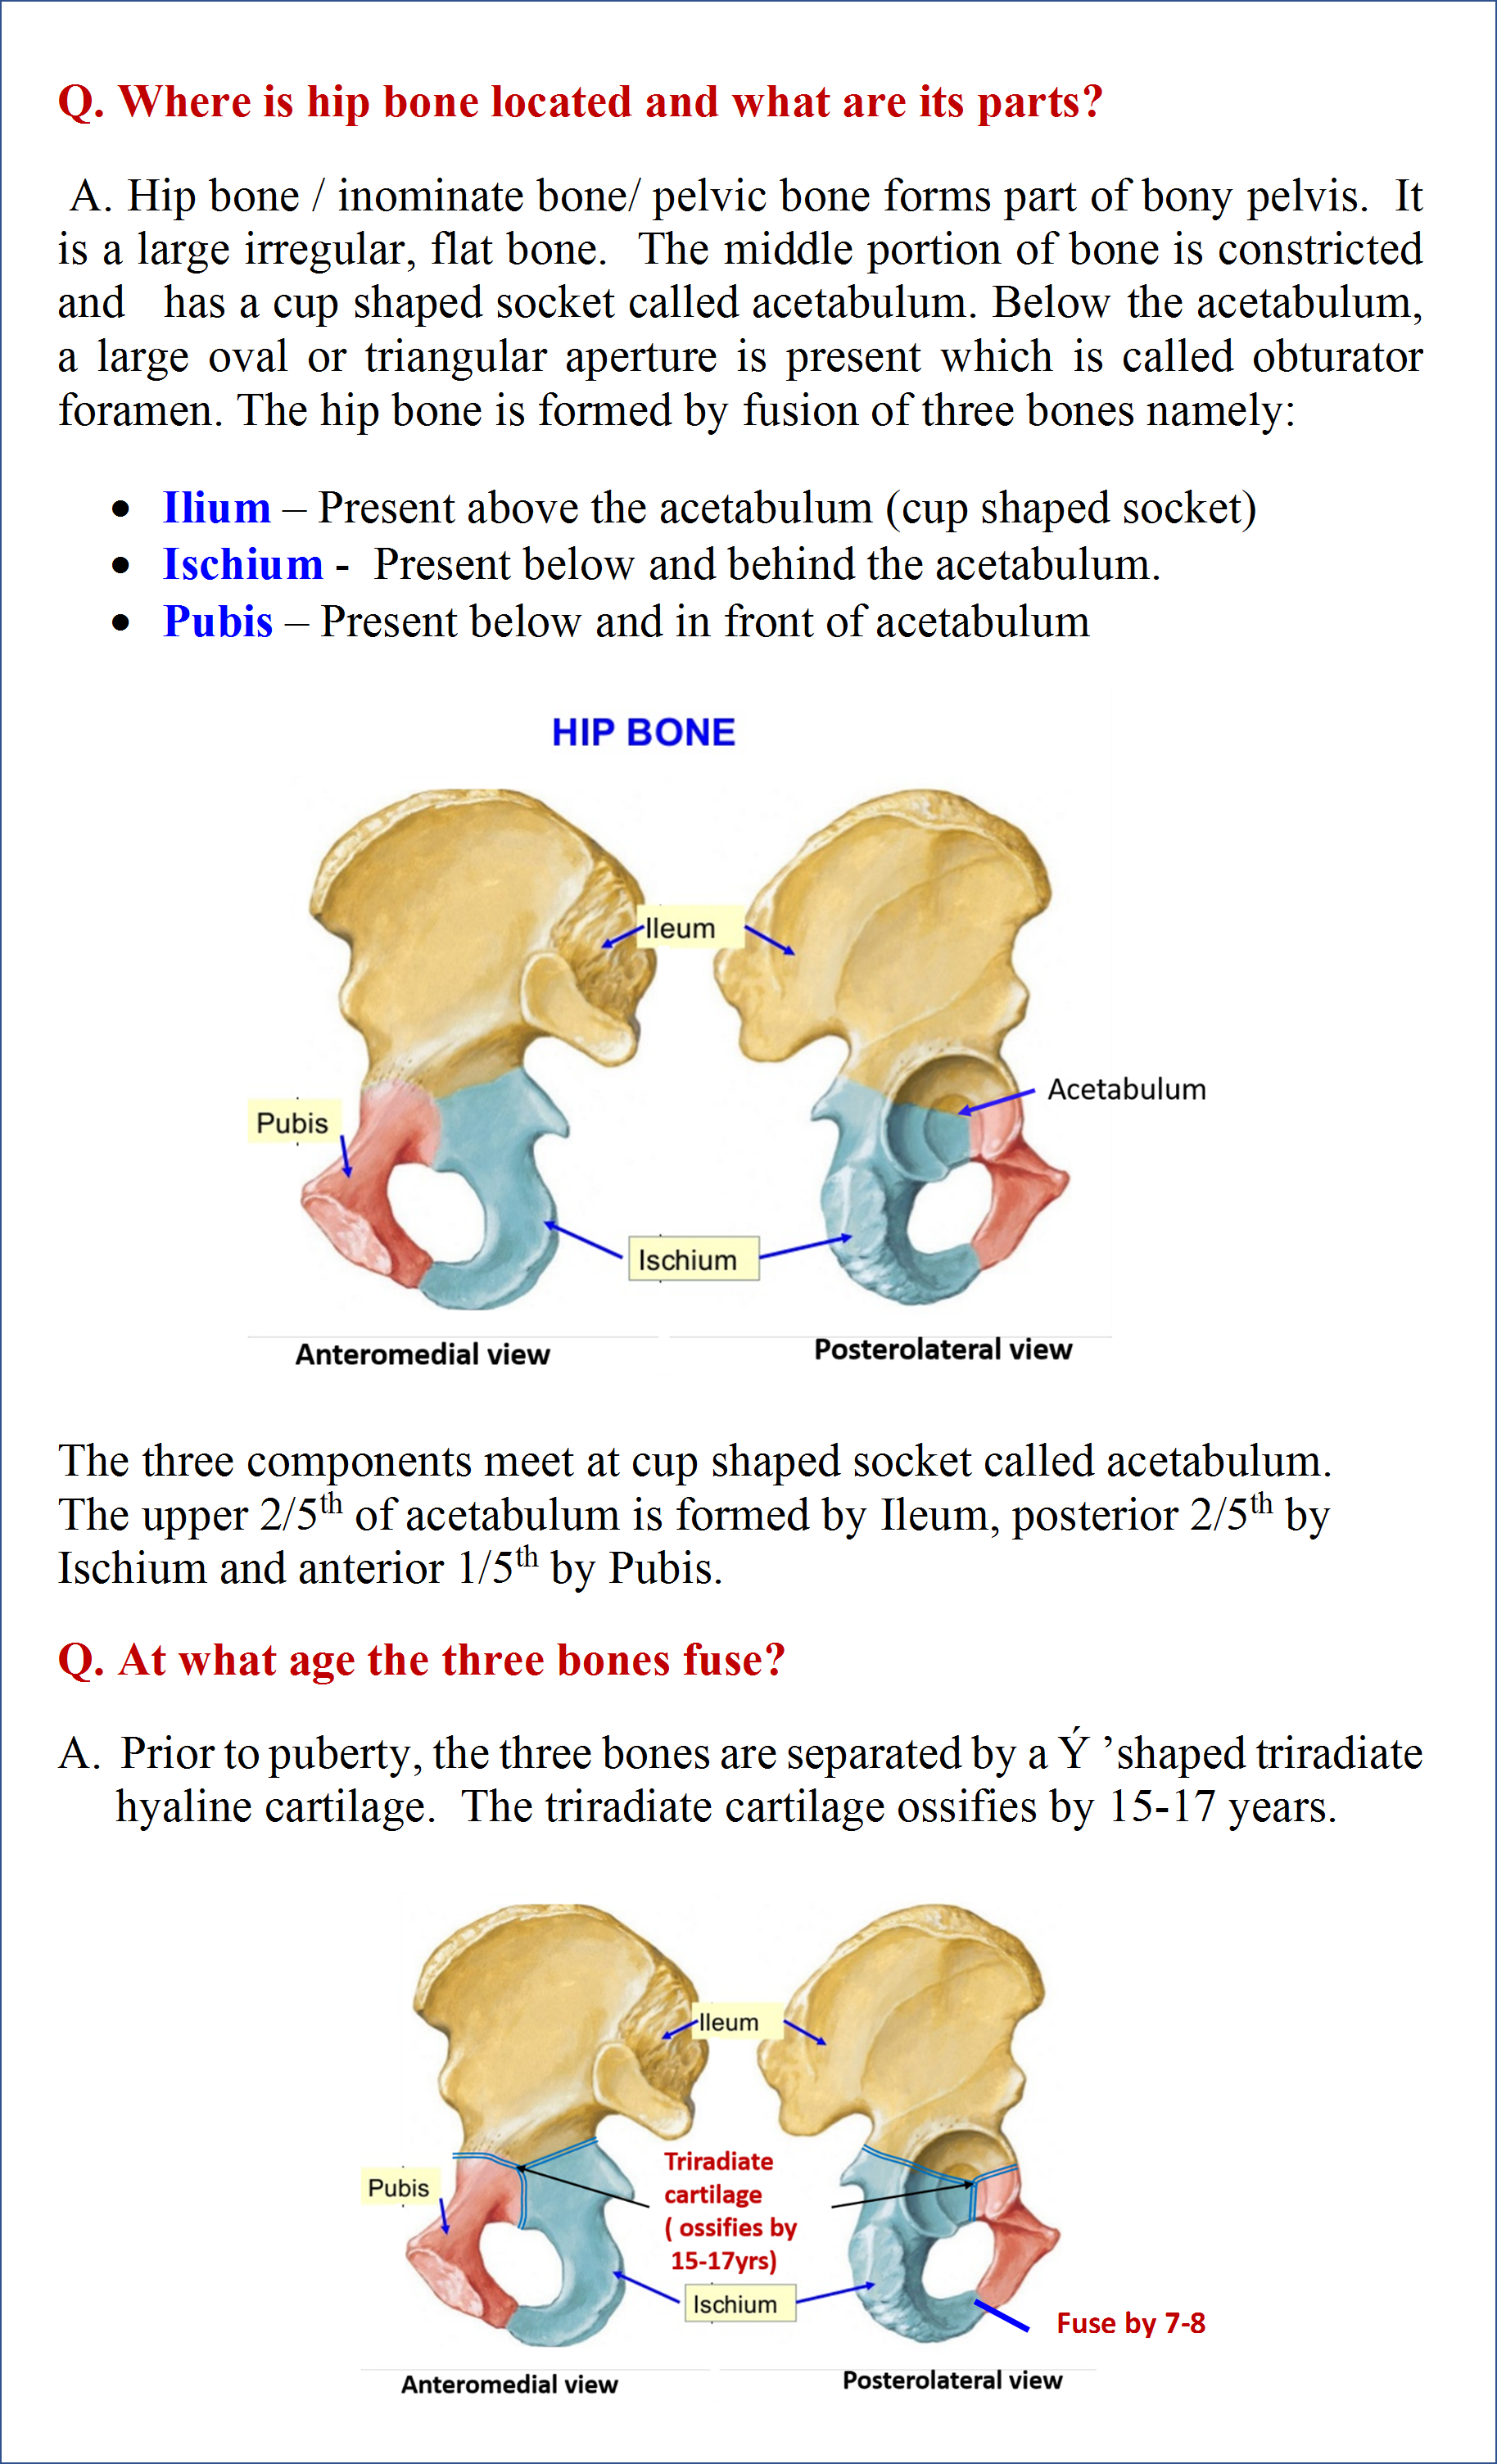 Parts of Hip bone